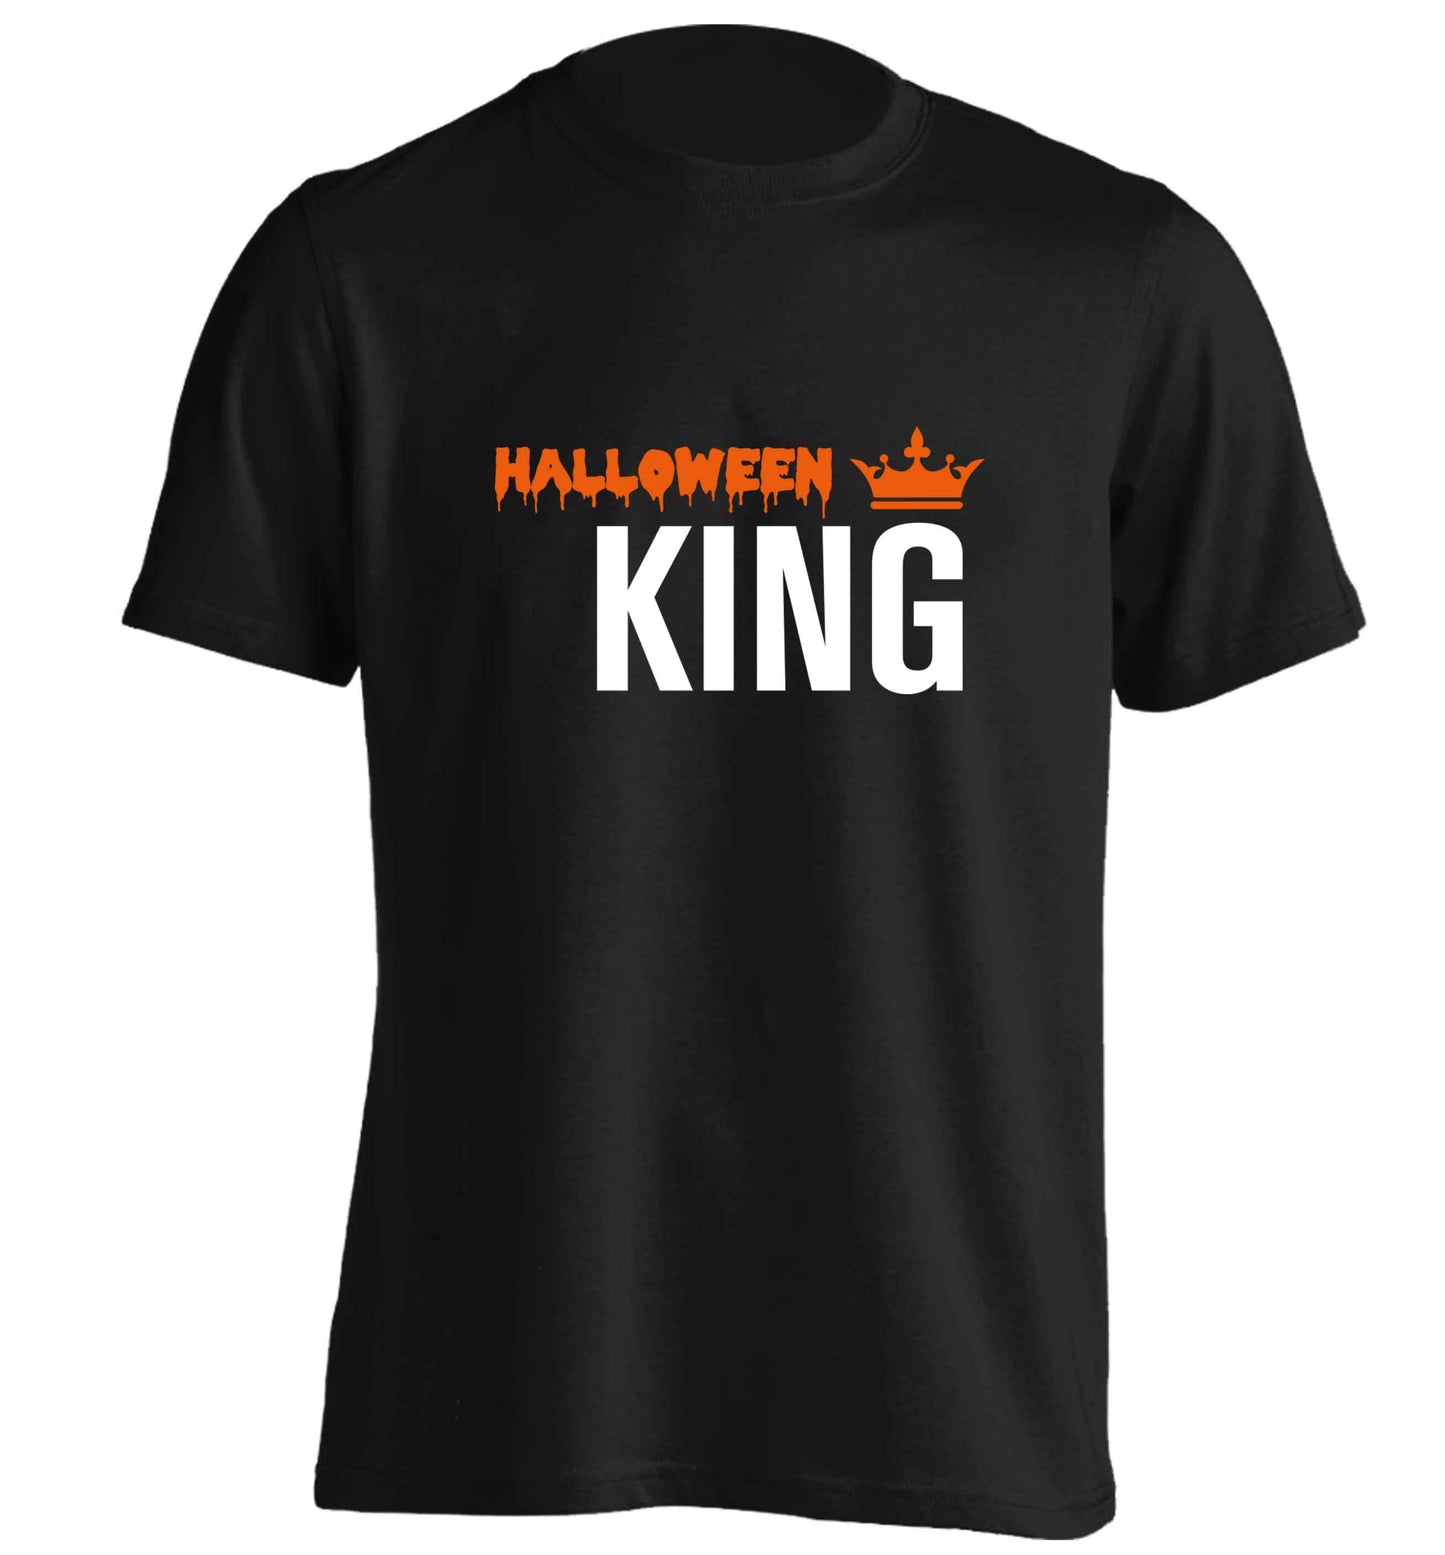 Halloween king adults unisex black Tshirt 2XL